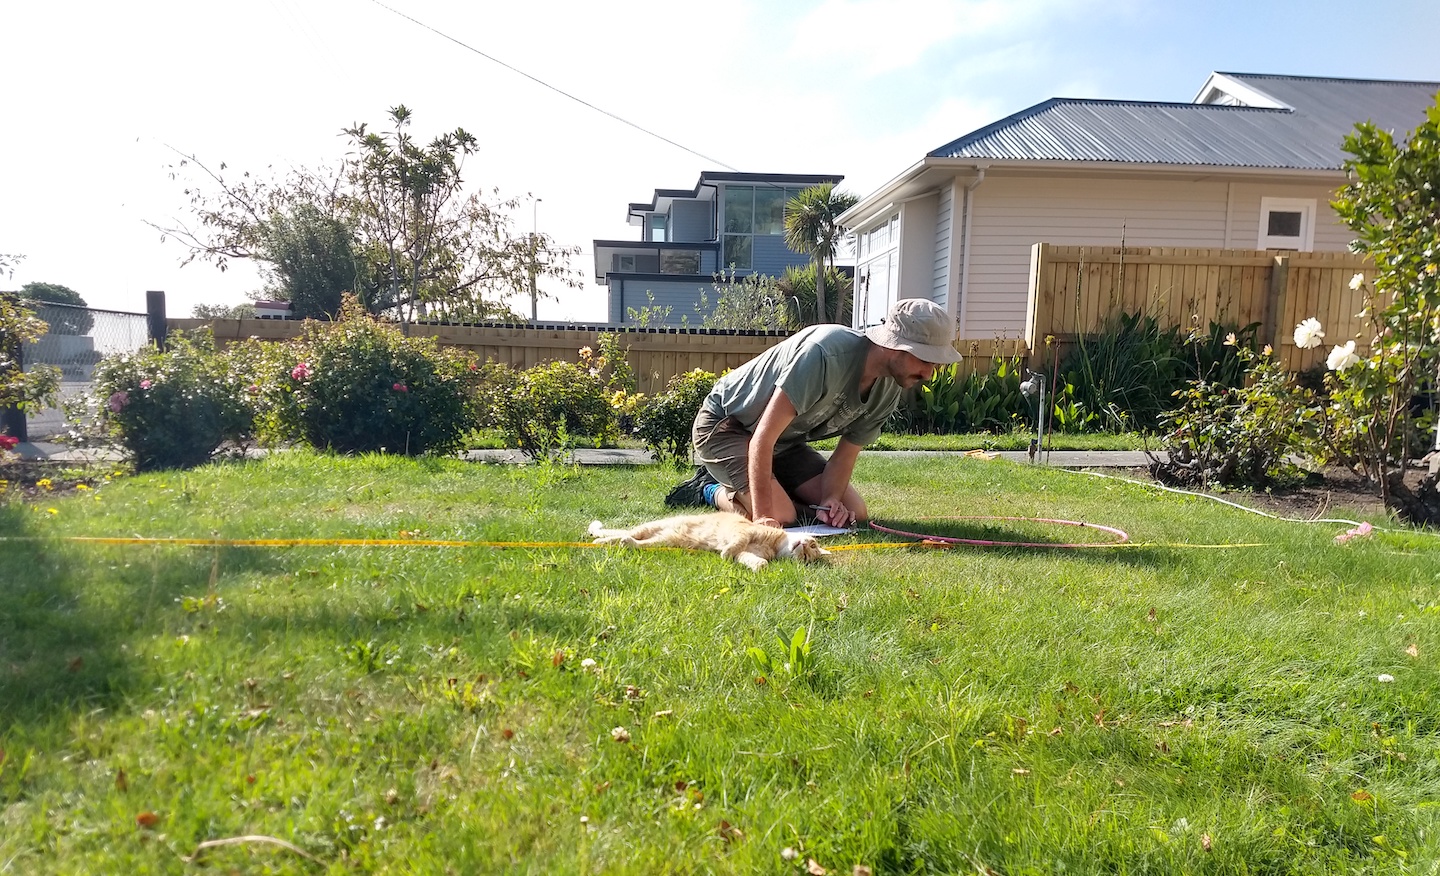 Warwick Allen surveying Taraxacum officinale in Christchurch, New Zealand with a feline friend